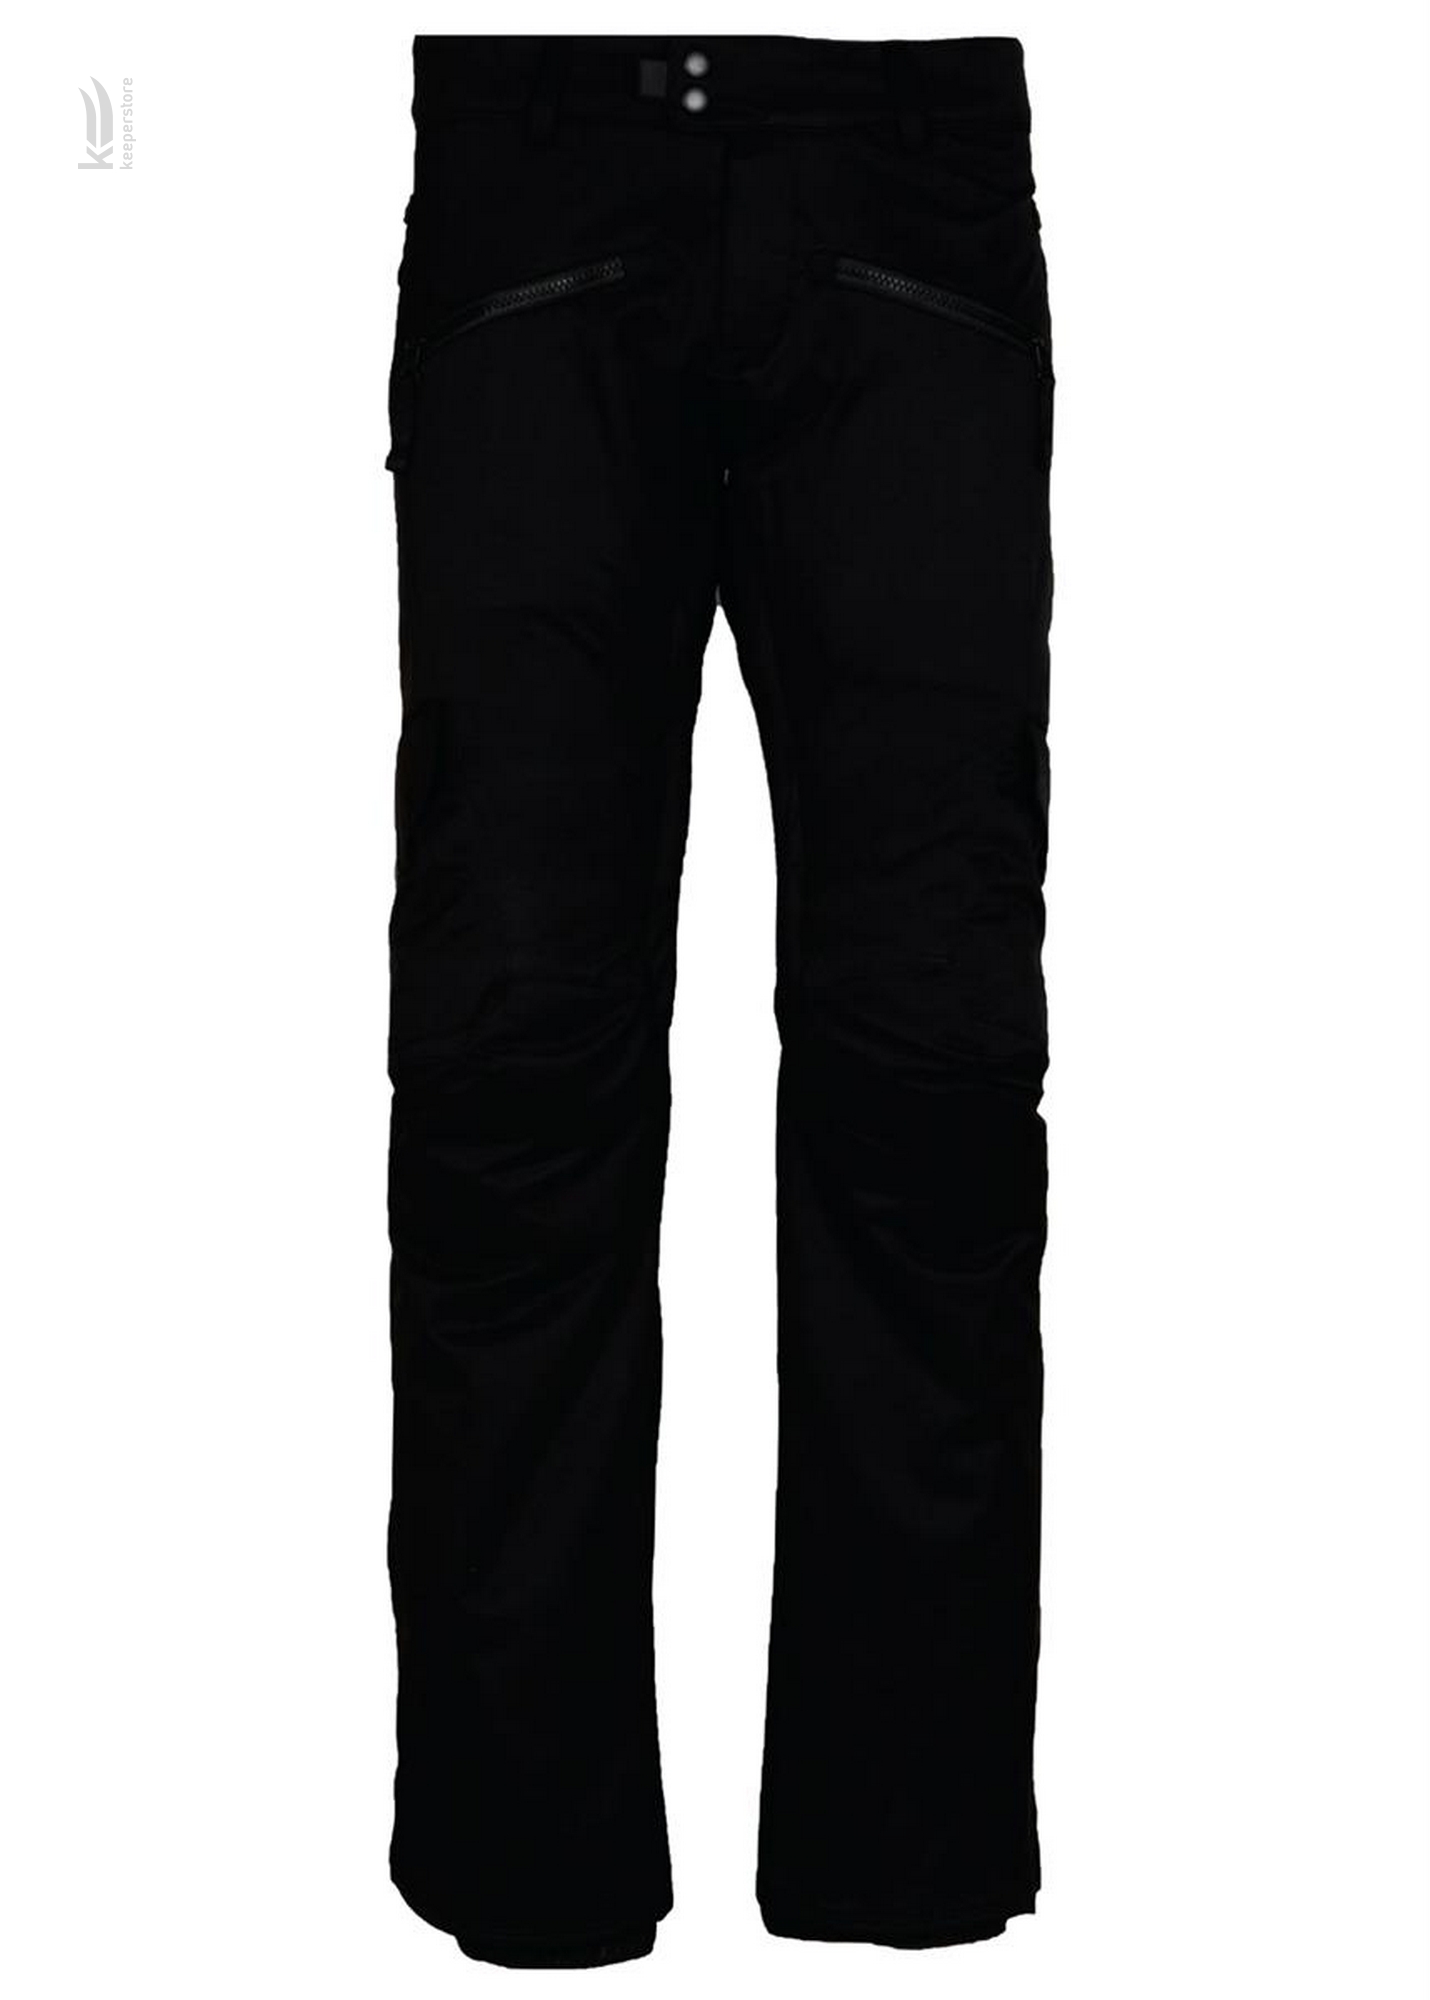 Зимние спортивные штаны 686 Authentic Mistress Insulated Pant Black Jade (S)